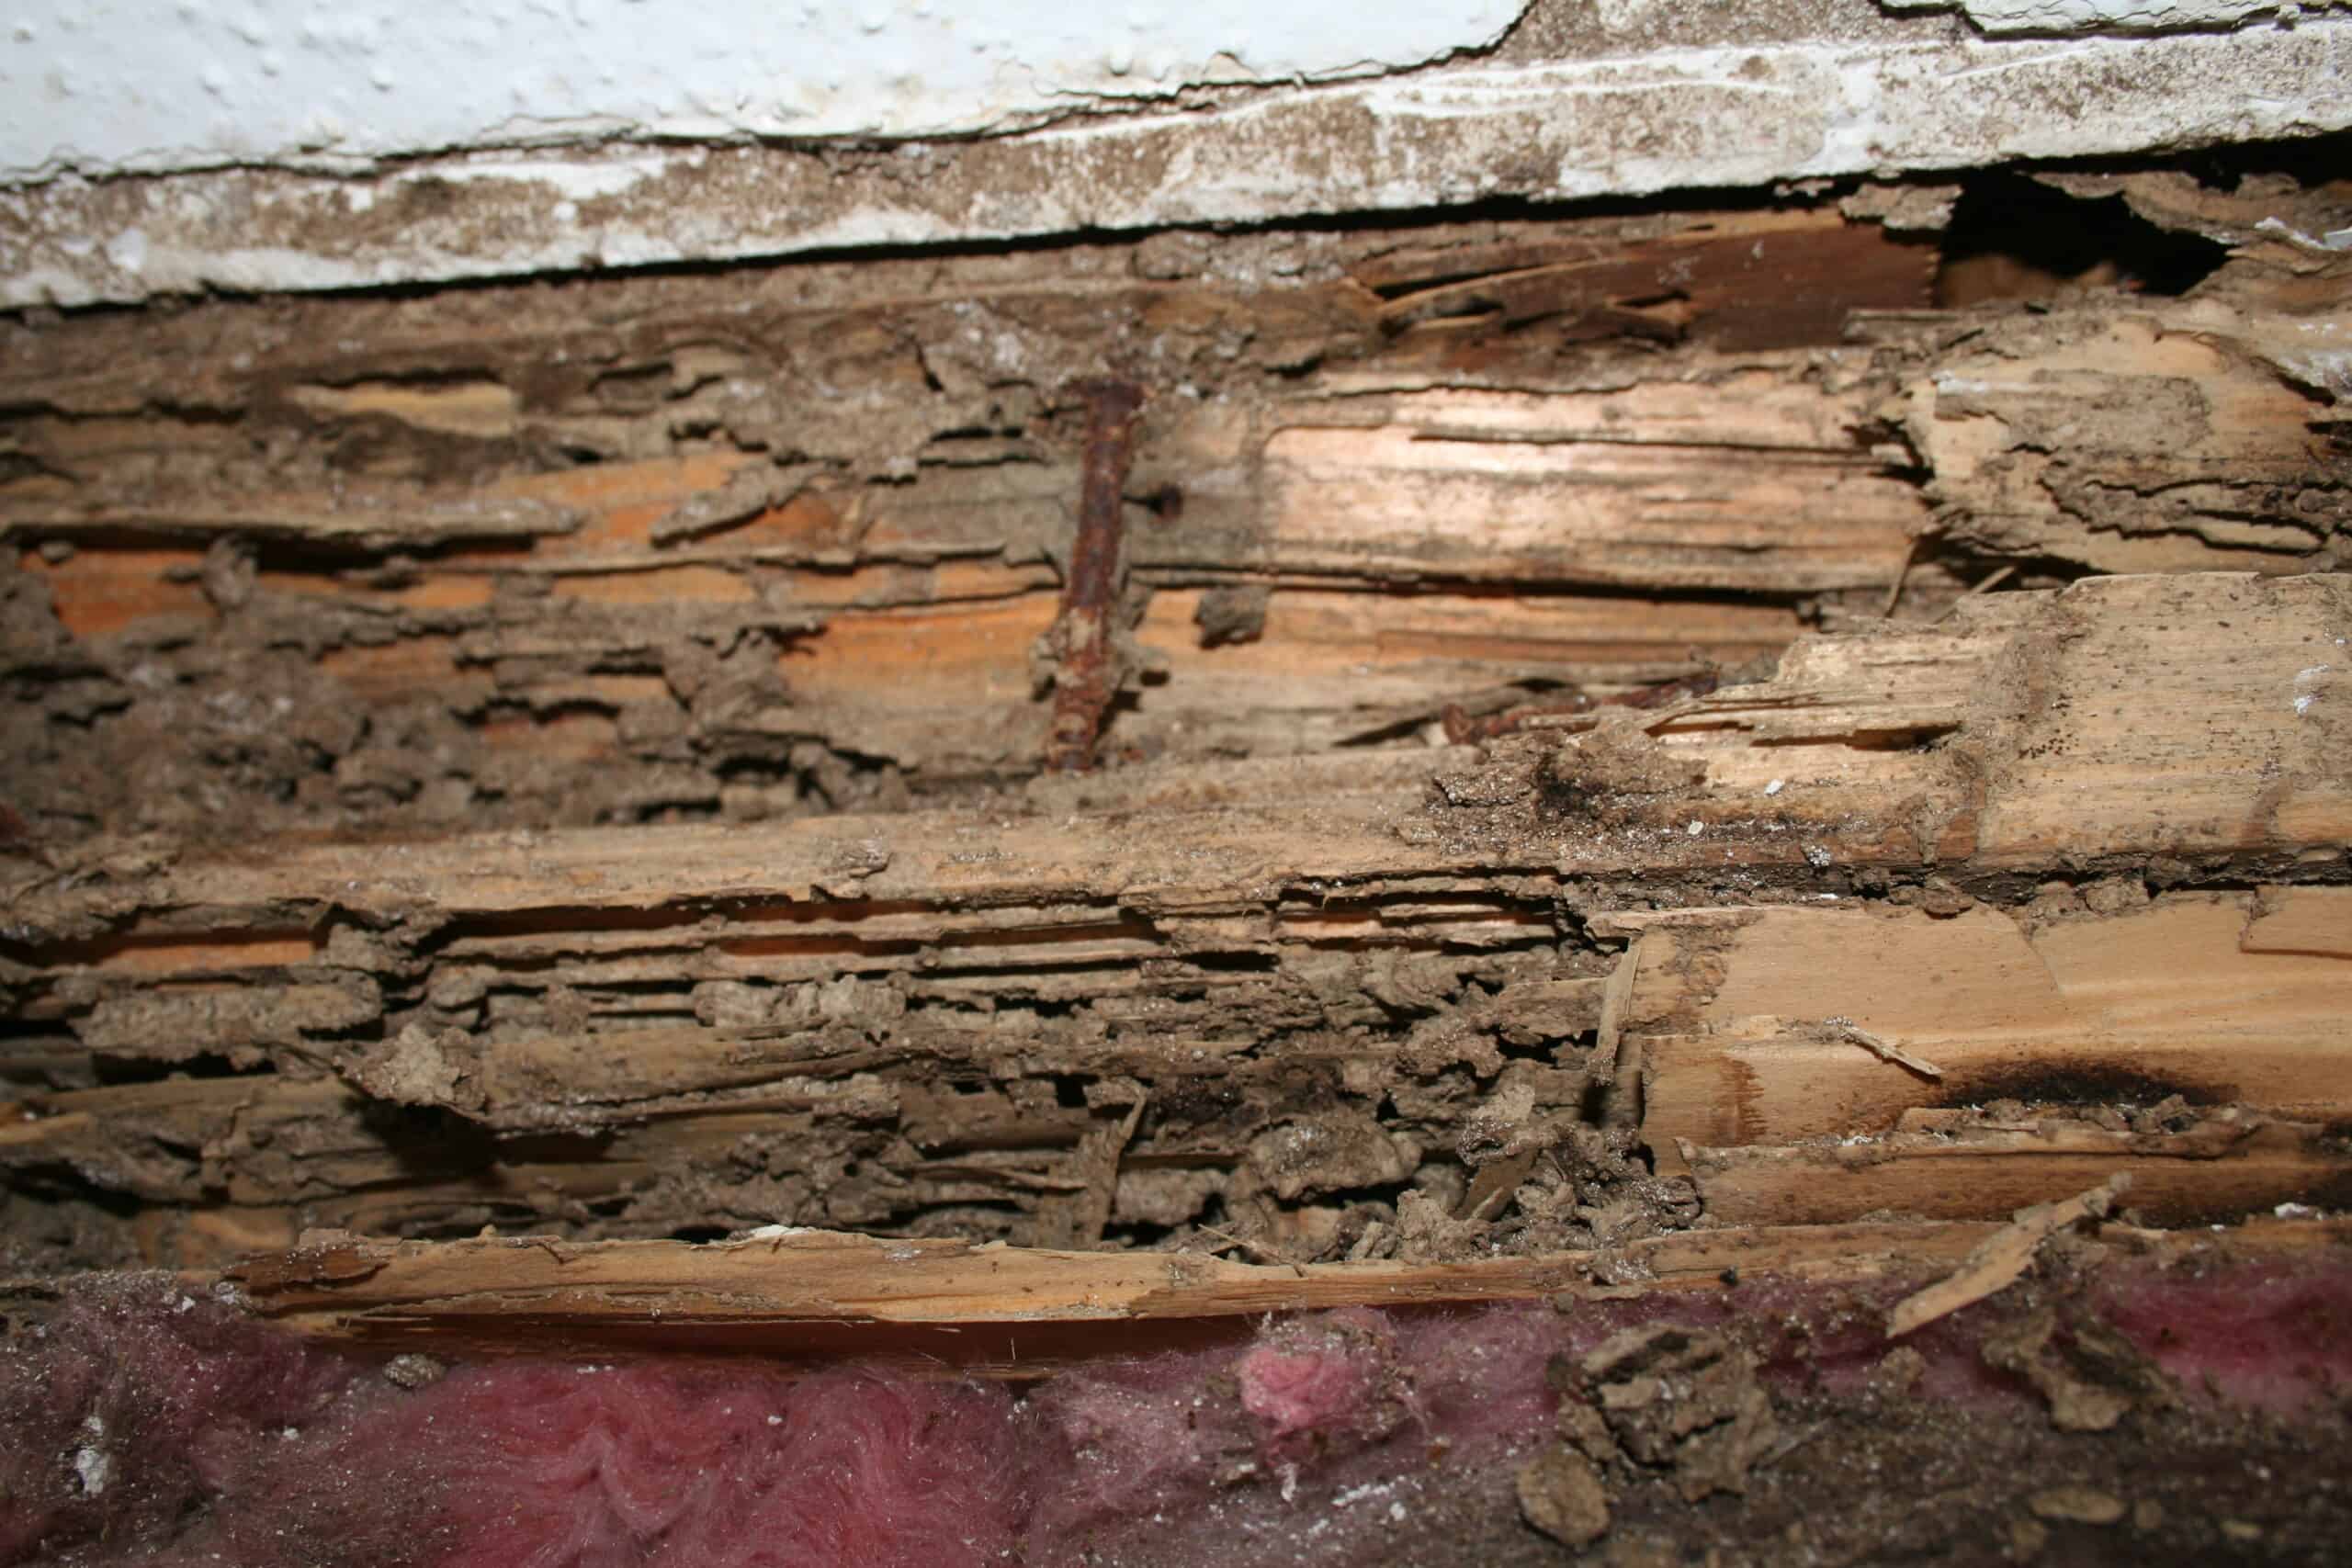 termite inspection fresno